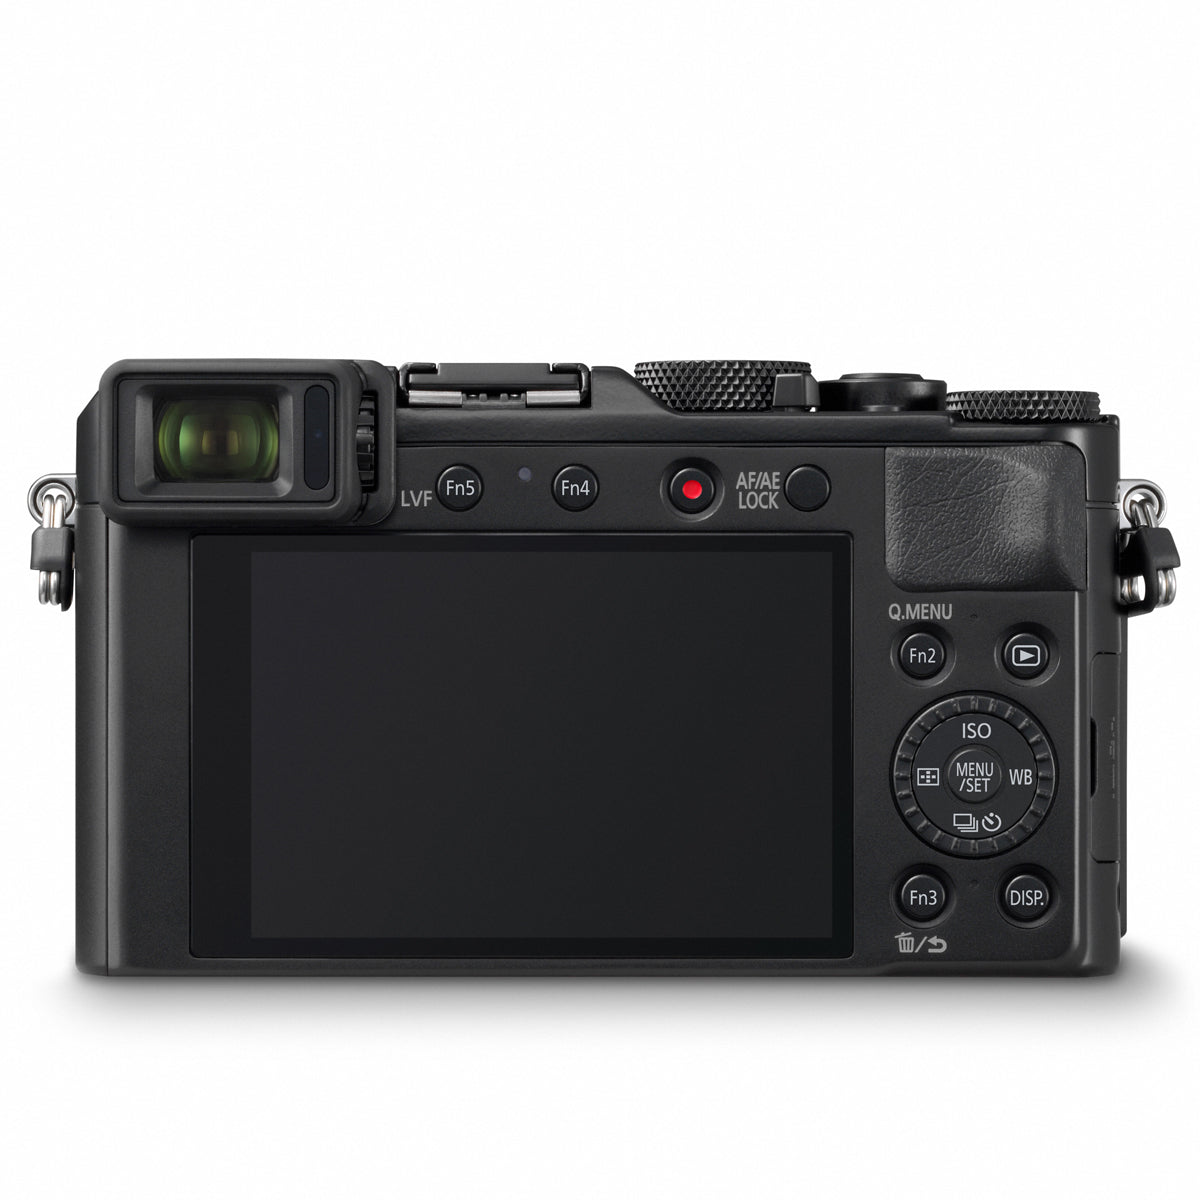 Panasonic Lumix DC-LX100 II Digital Camera (Black)